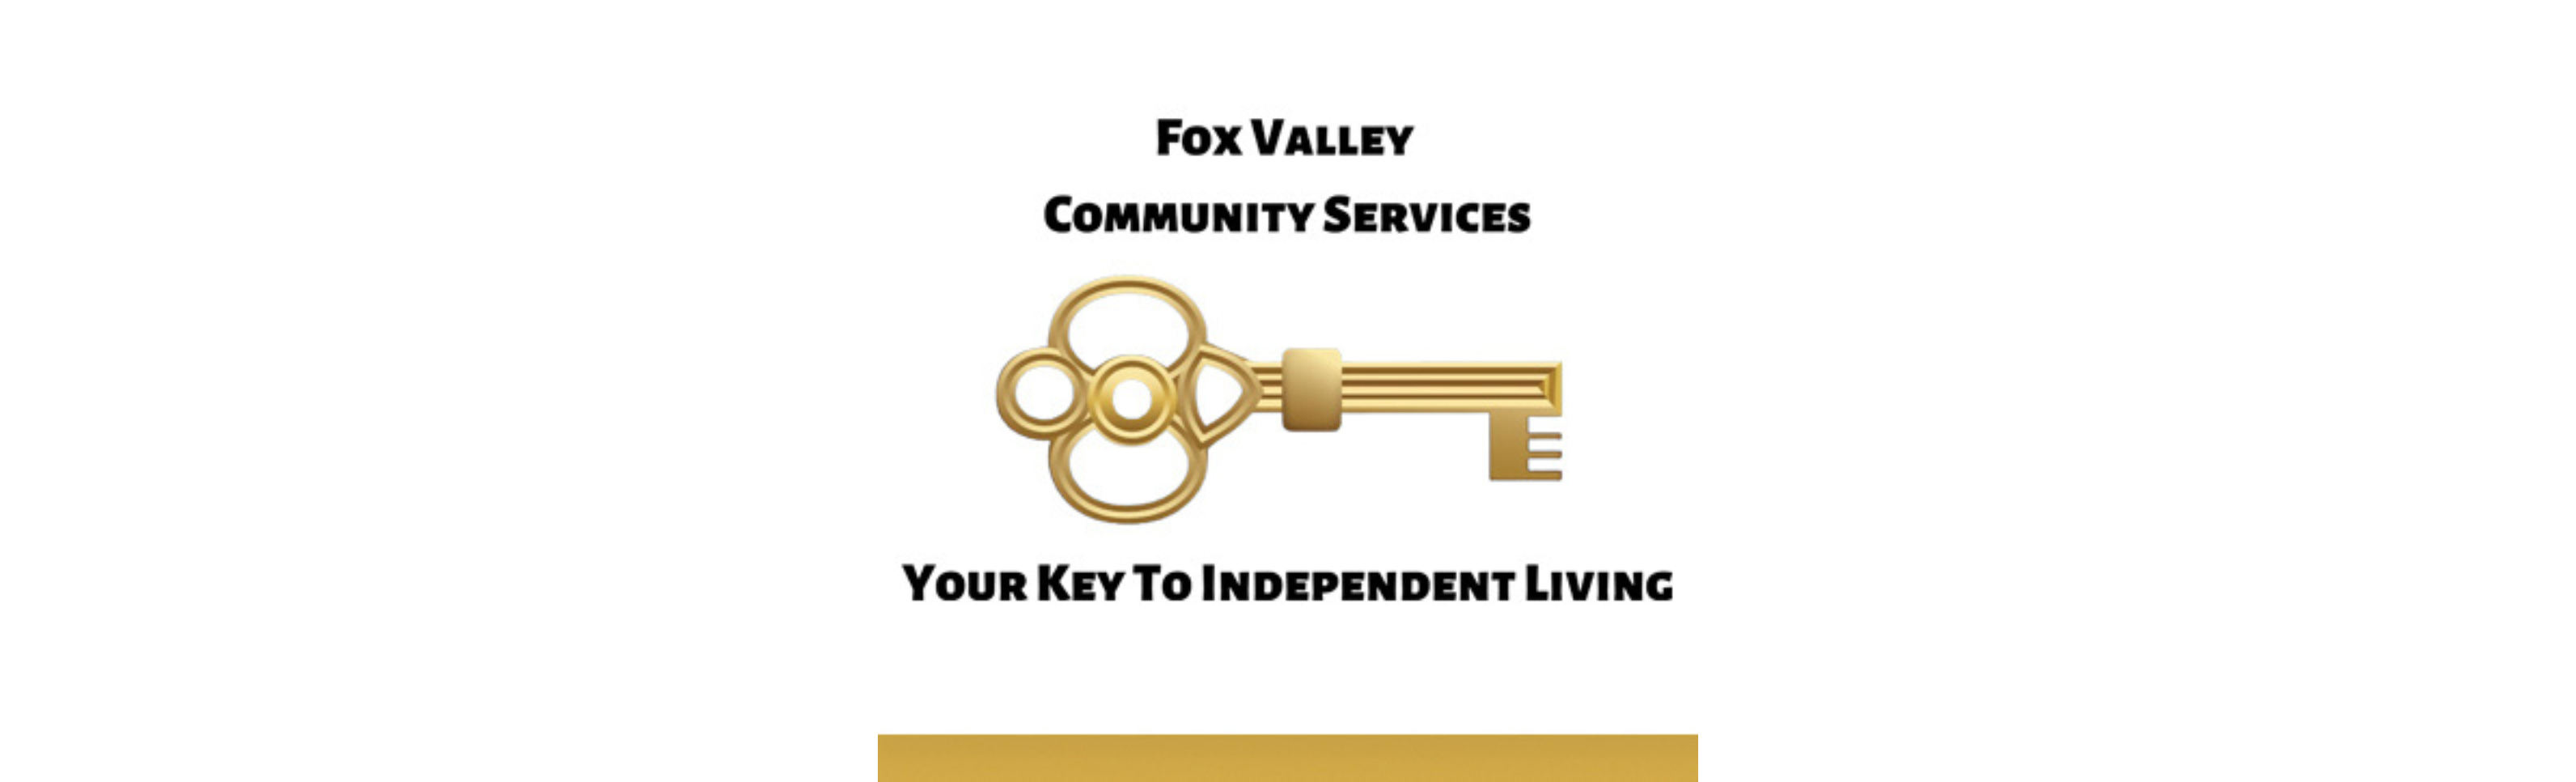 Fox Valley Community Services Case Study